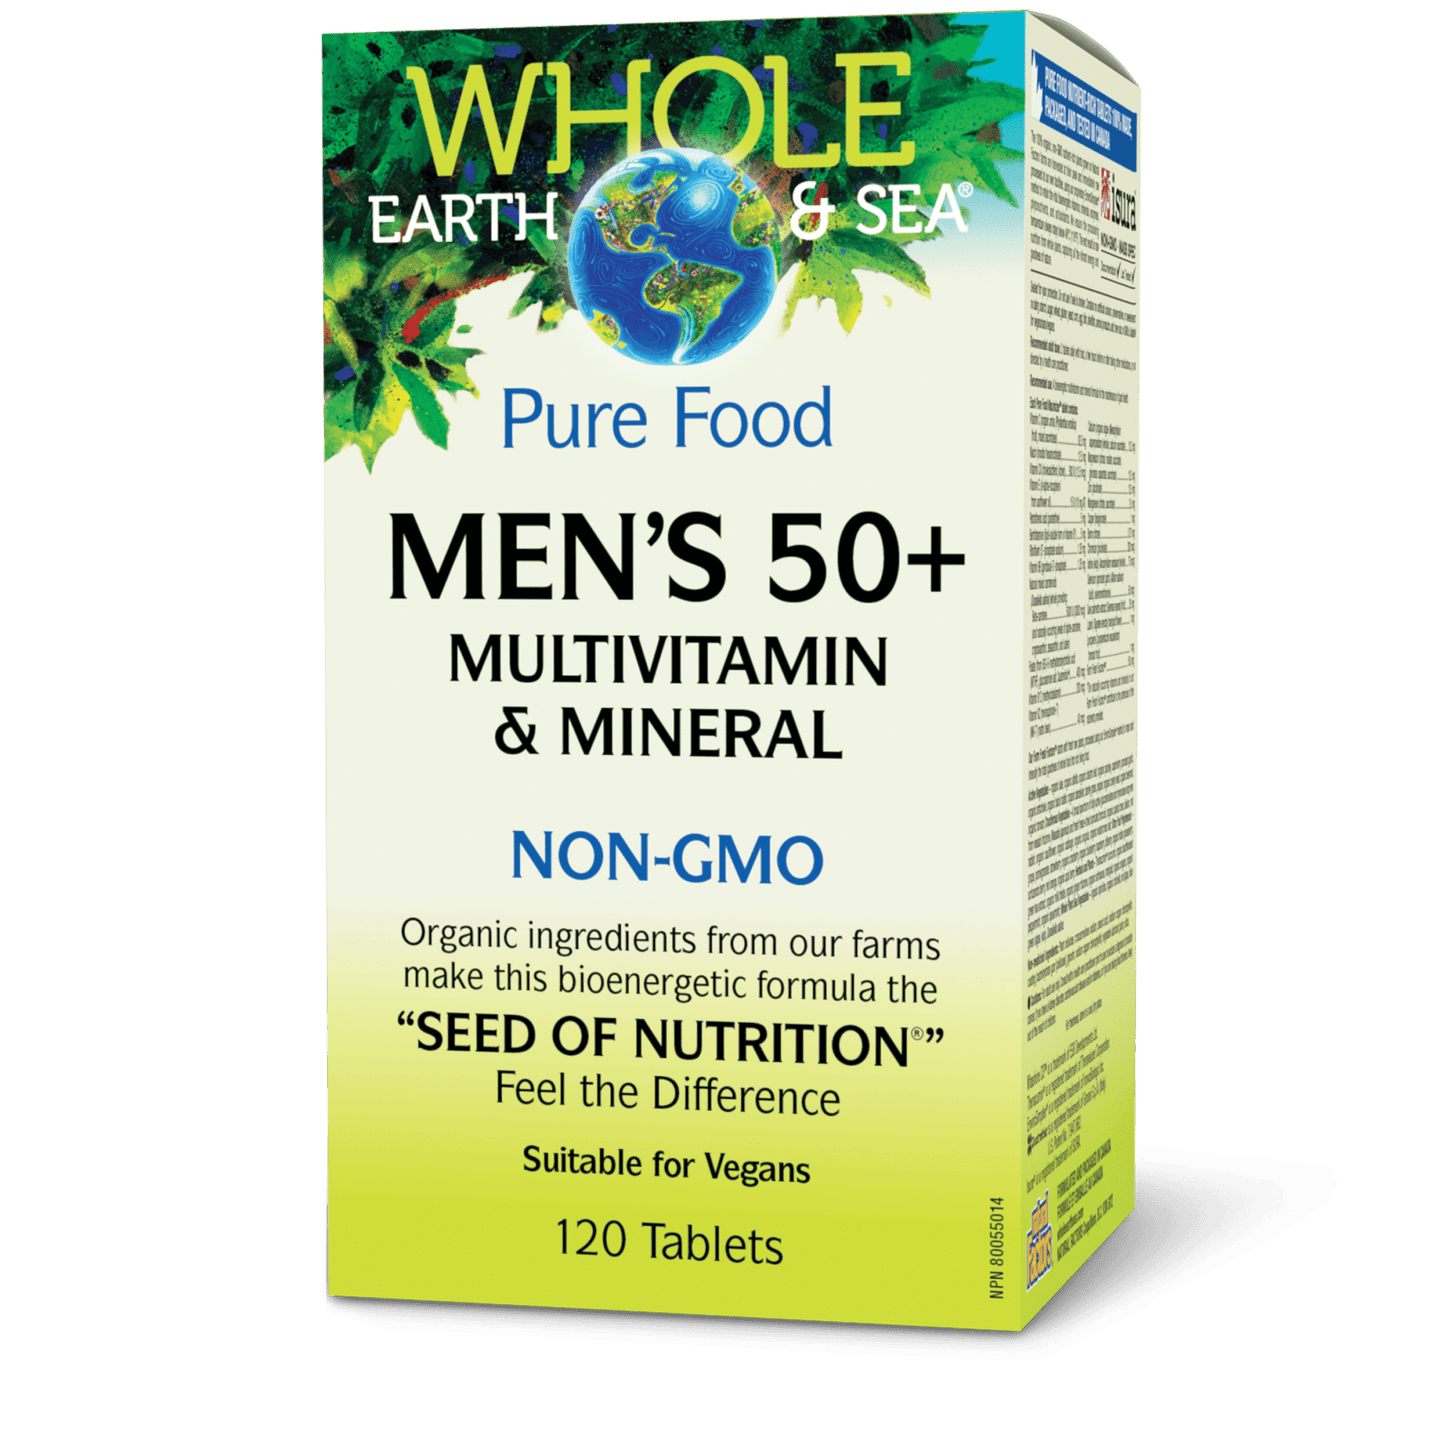 Men’s 50+ Multivitamin & Mineral, Whole Earth & Sea, Whole Earth & Sea®|v|image|35521